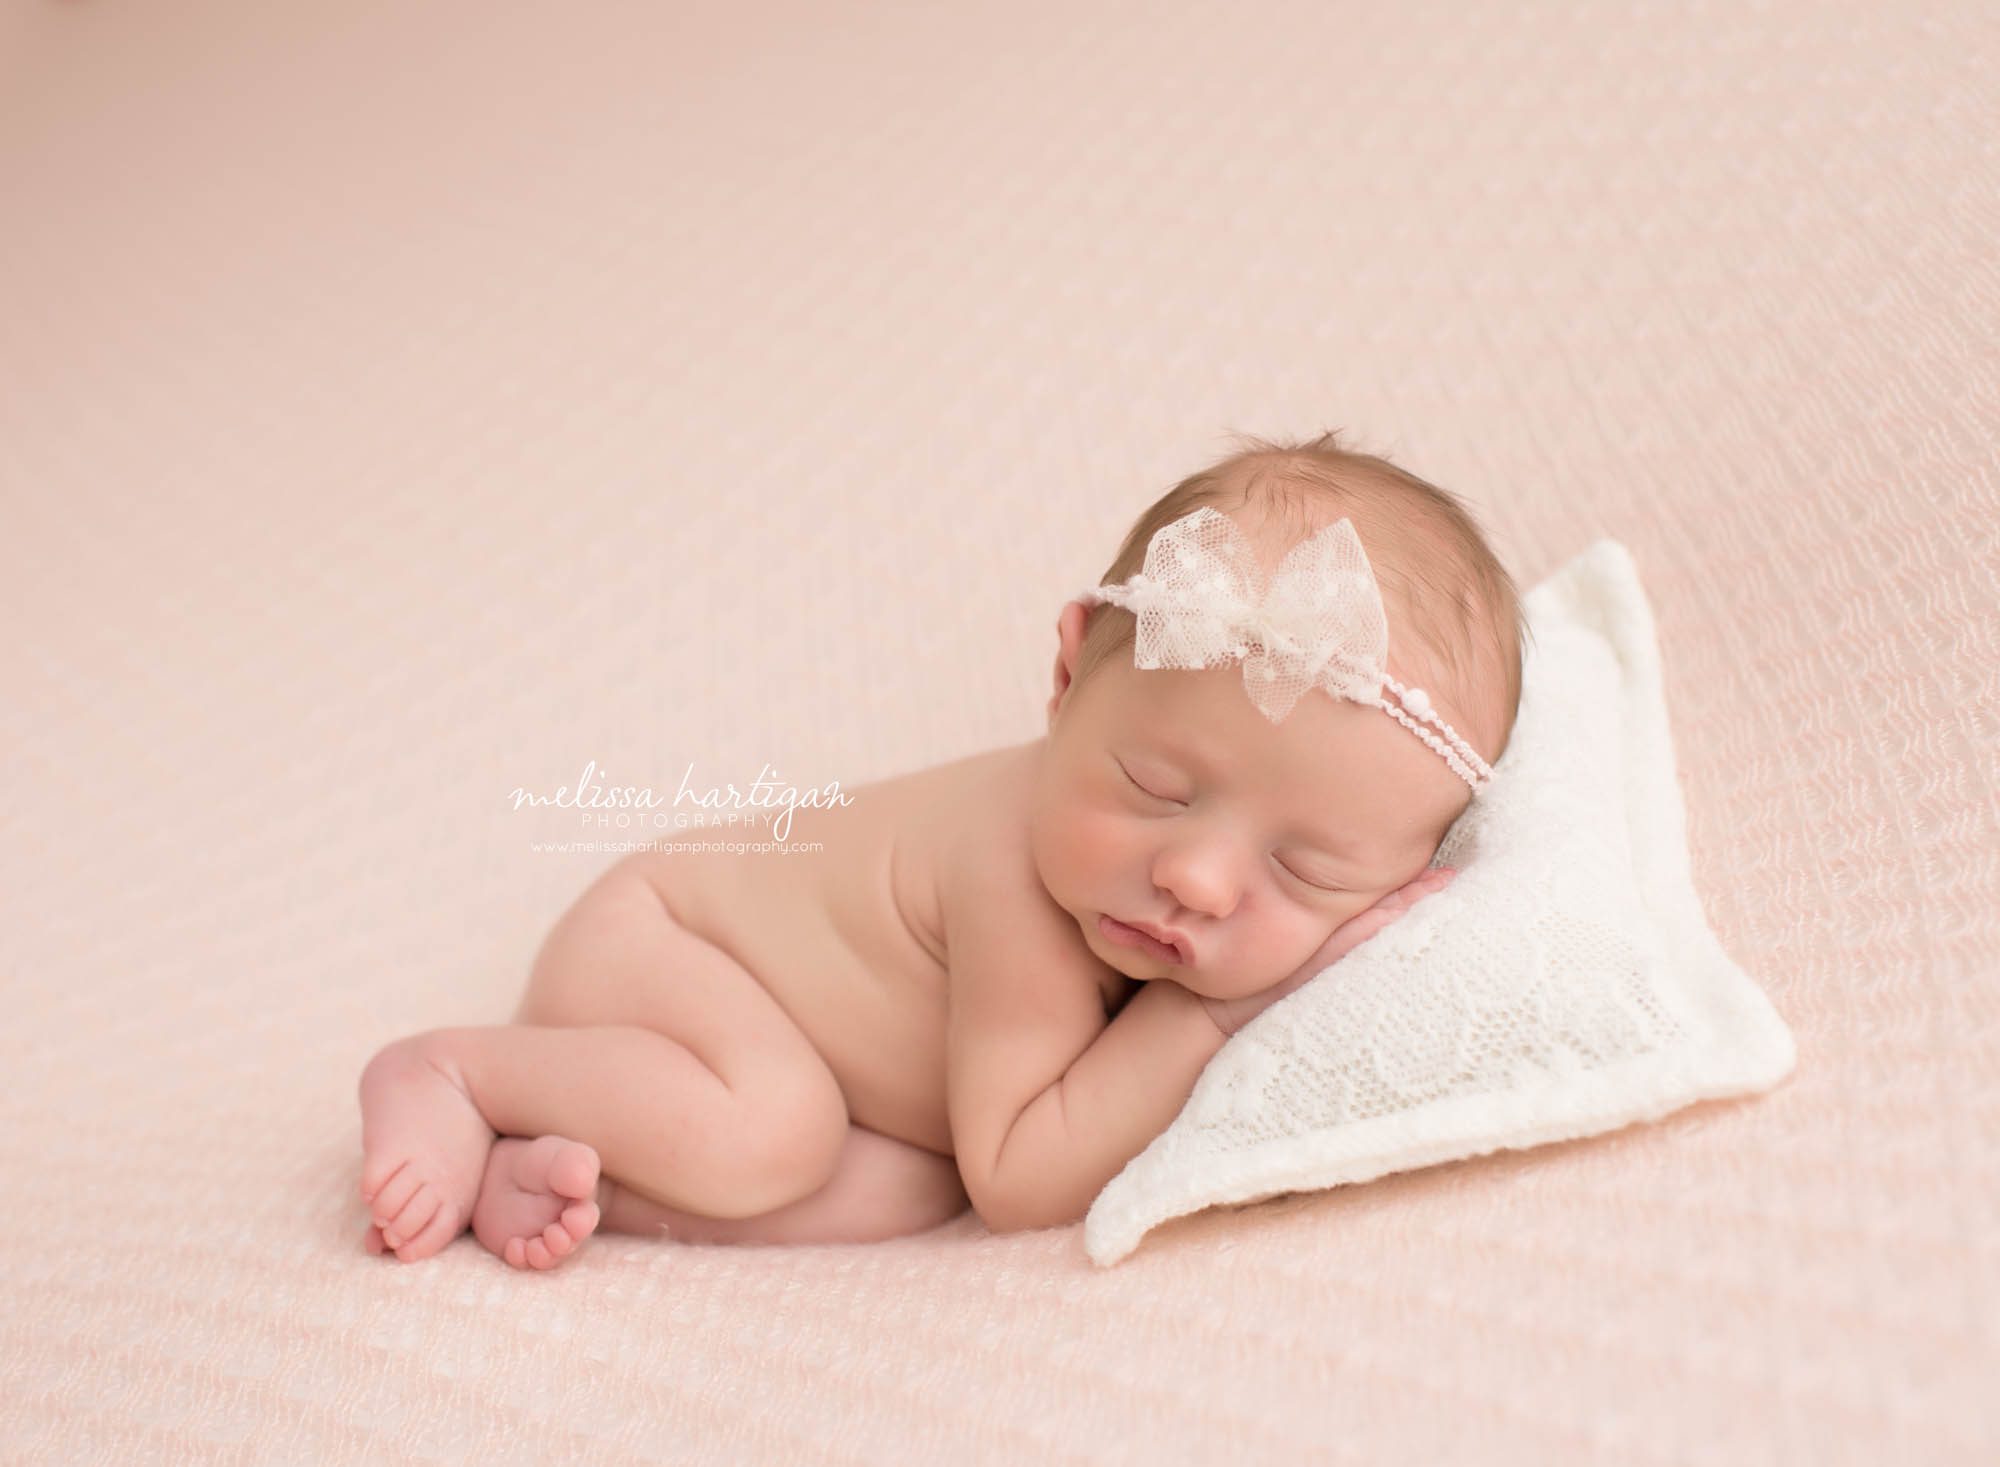 Baby girl posed on textured blanket with bow headband sleeping on newborn pillow